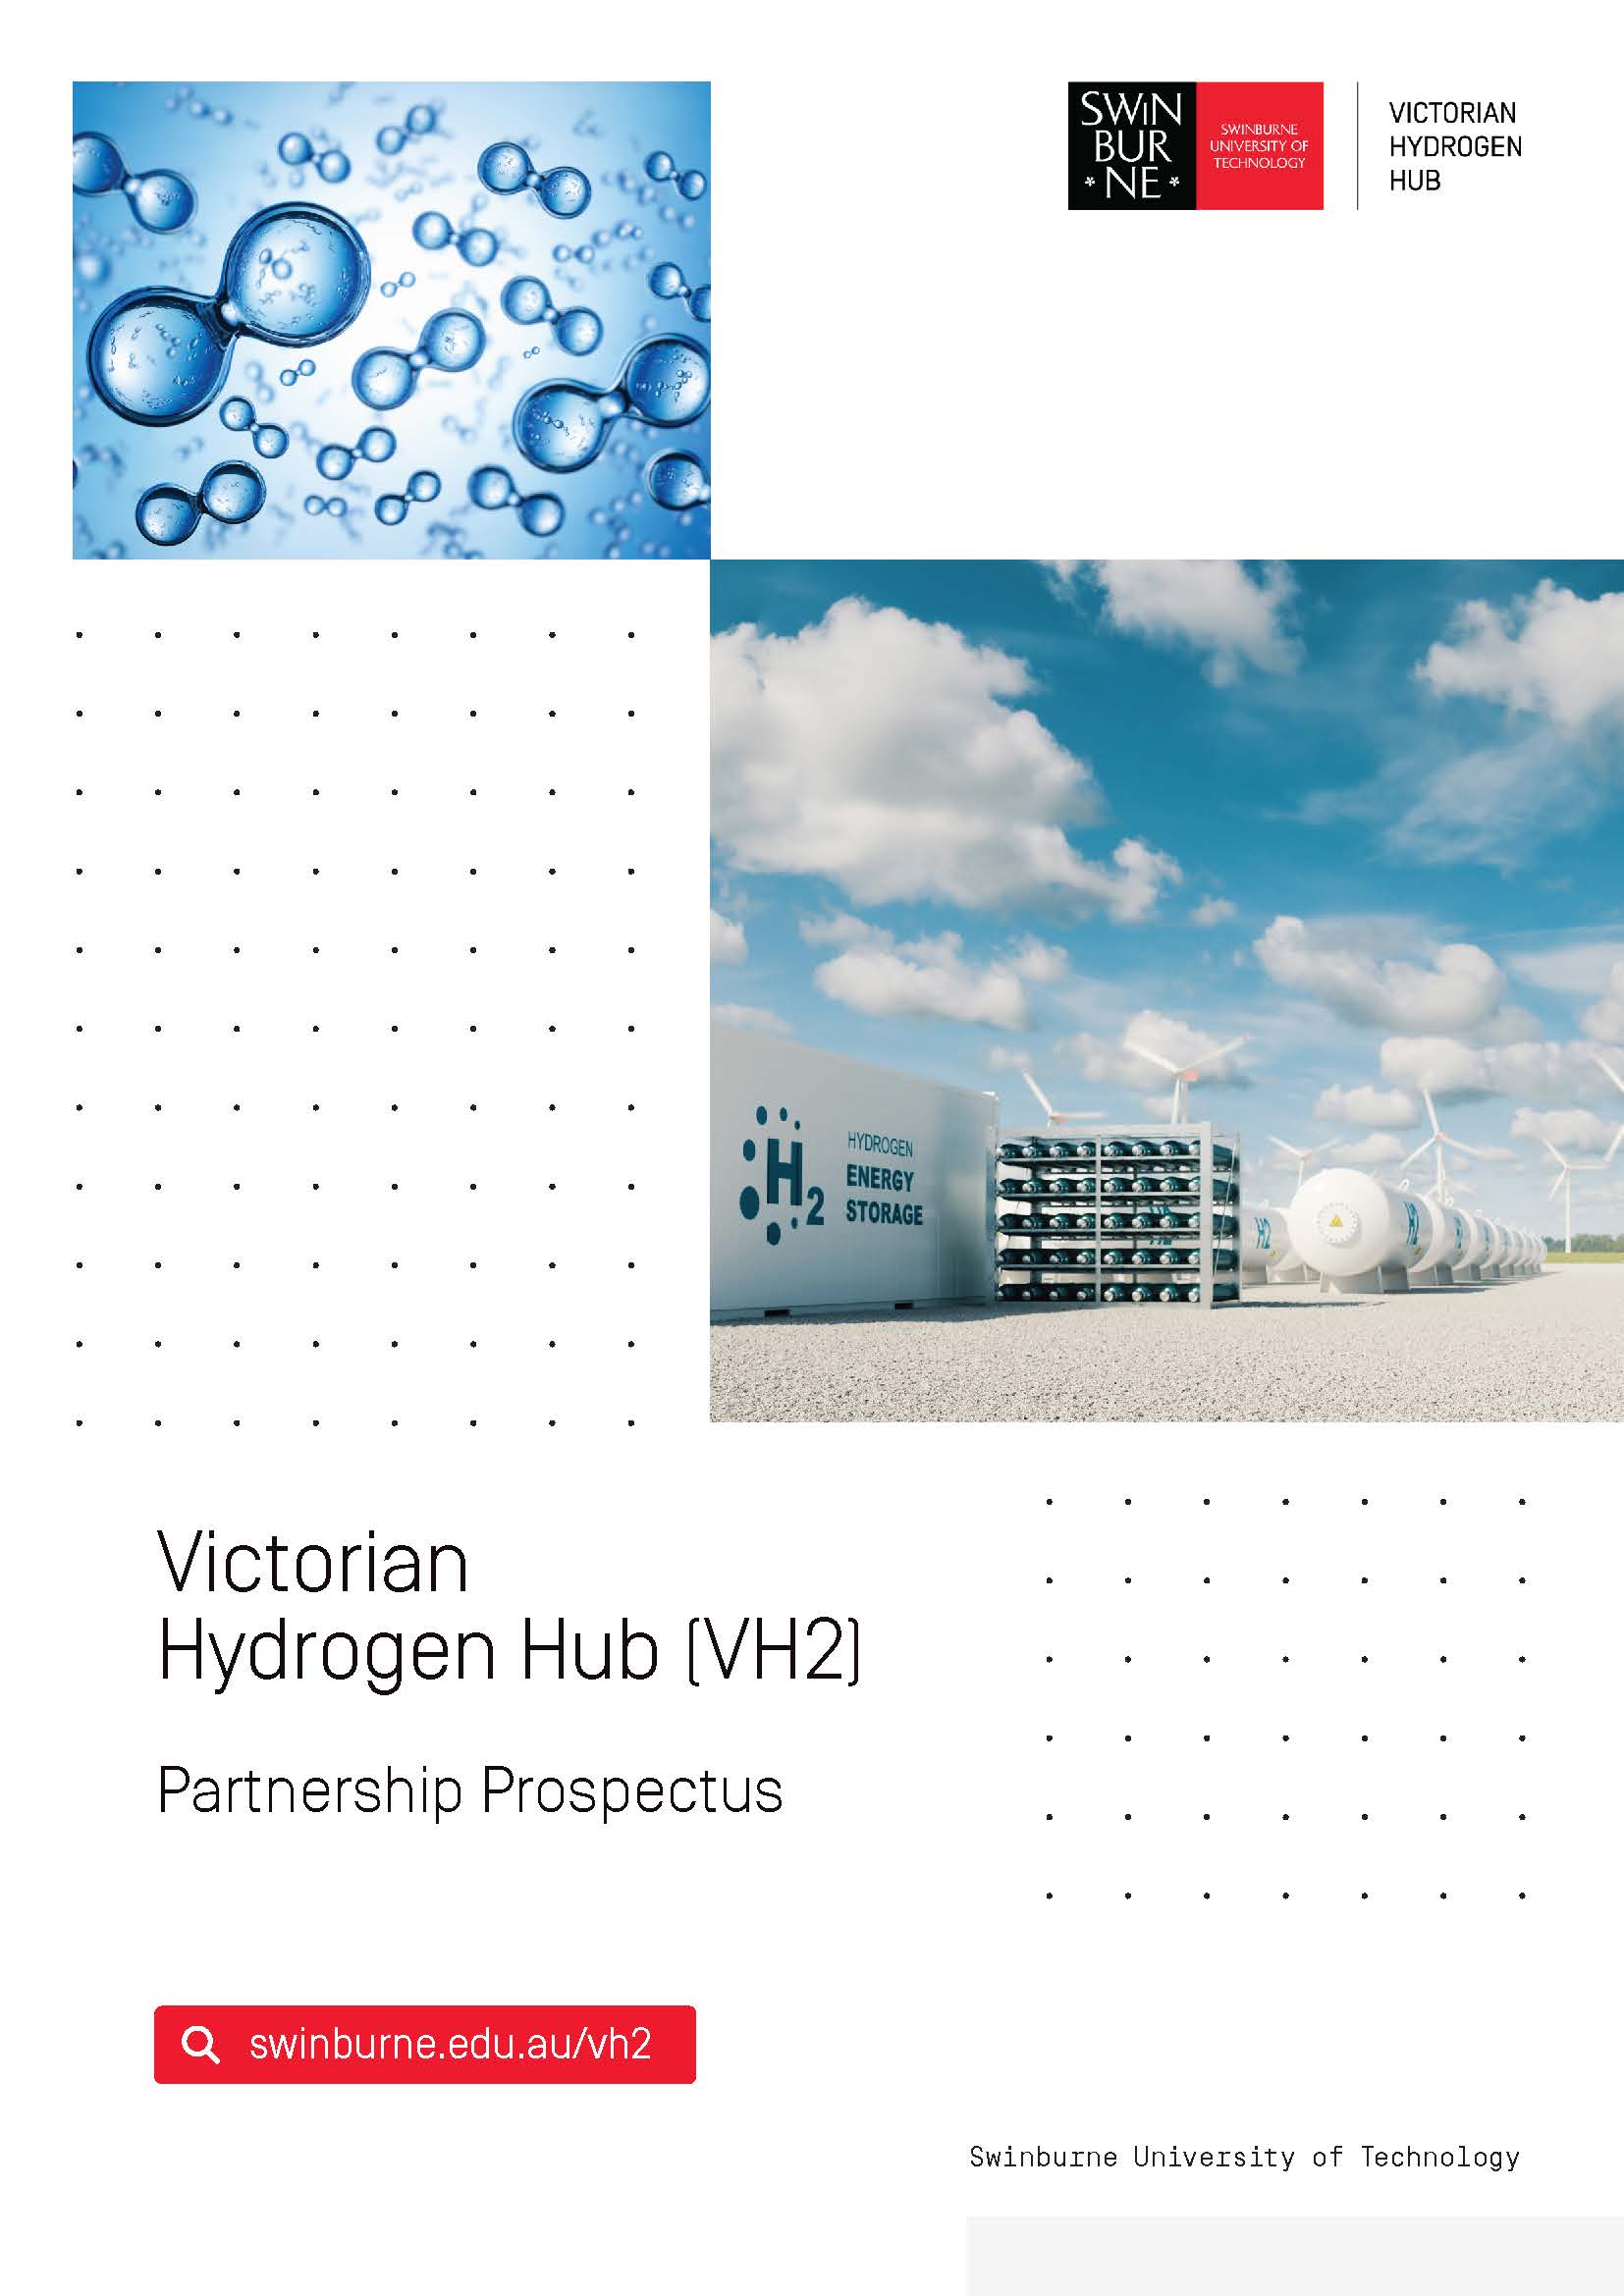 Victorian Hydrogen Hub Partnership Prospectus